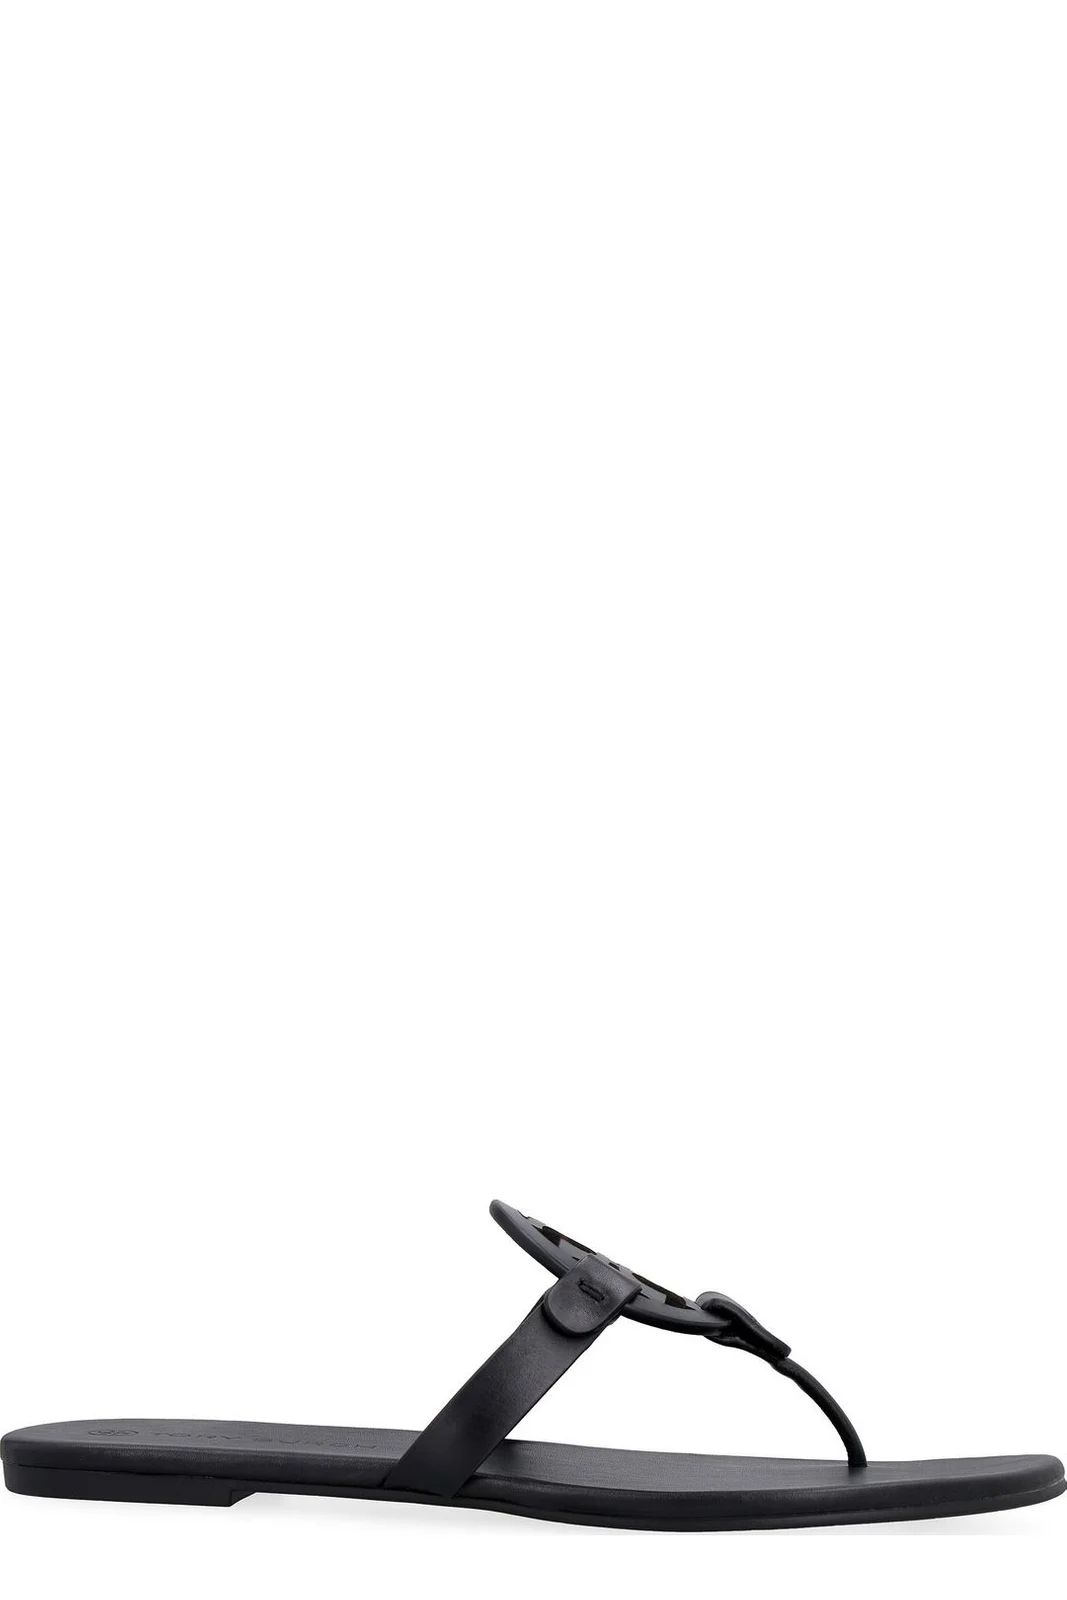 Tory Burch Miller Soft Logo Plaque Flat Sandals | Cettire Global